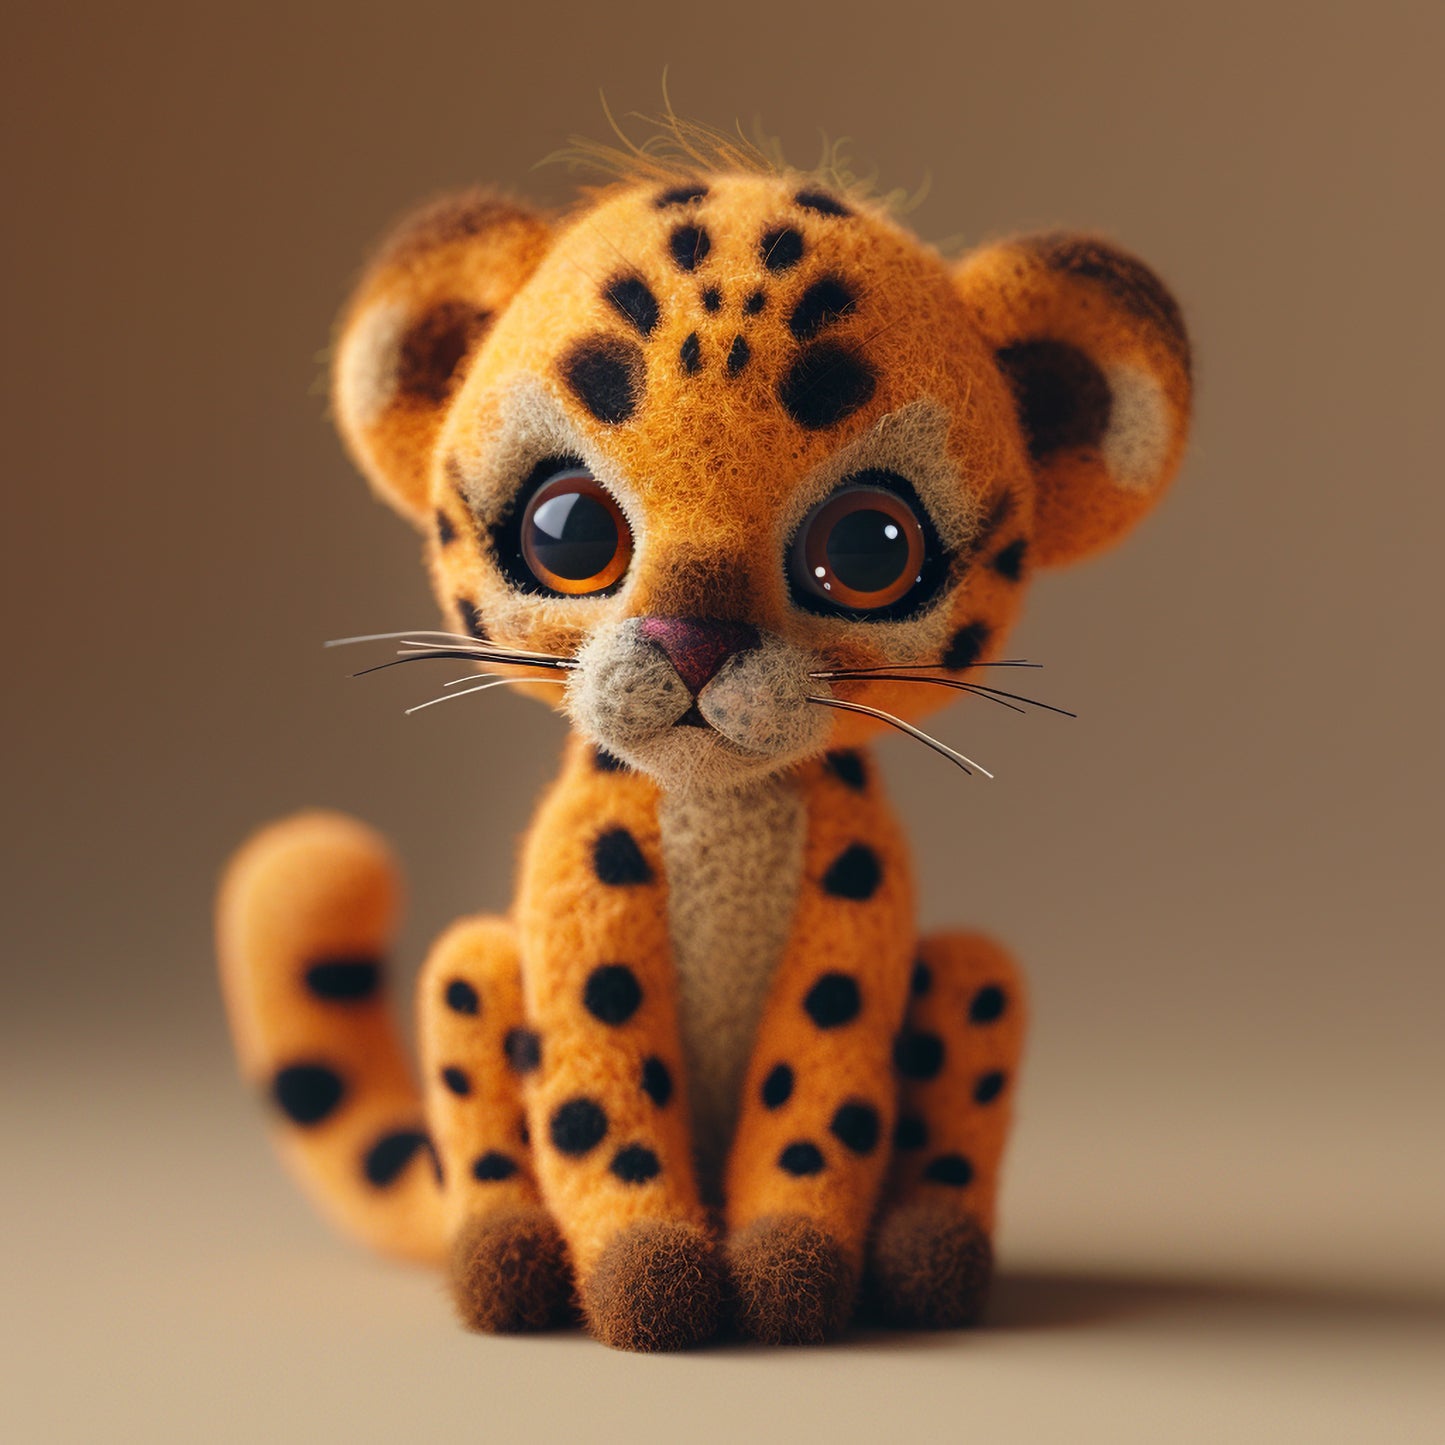 Adorable Handmade Cheetah Plush Toy with Big Eyes